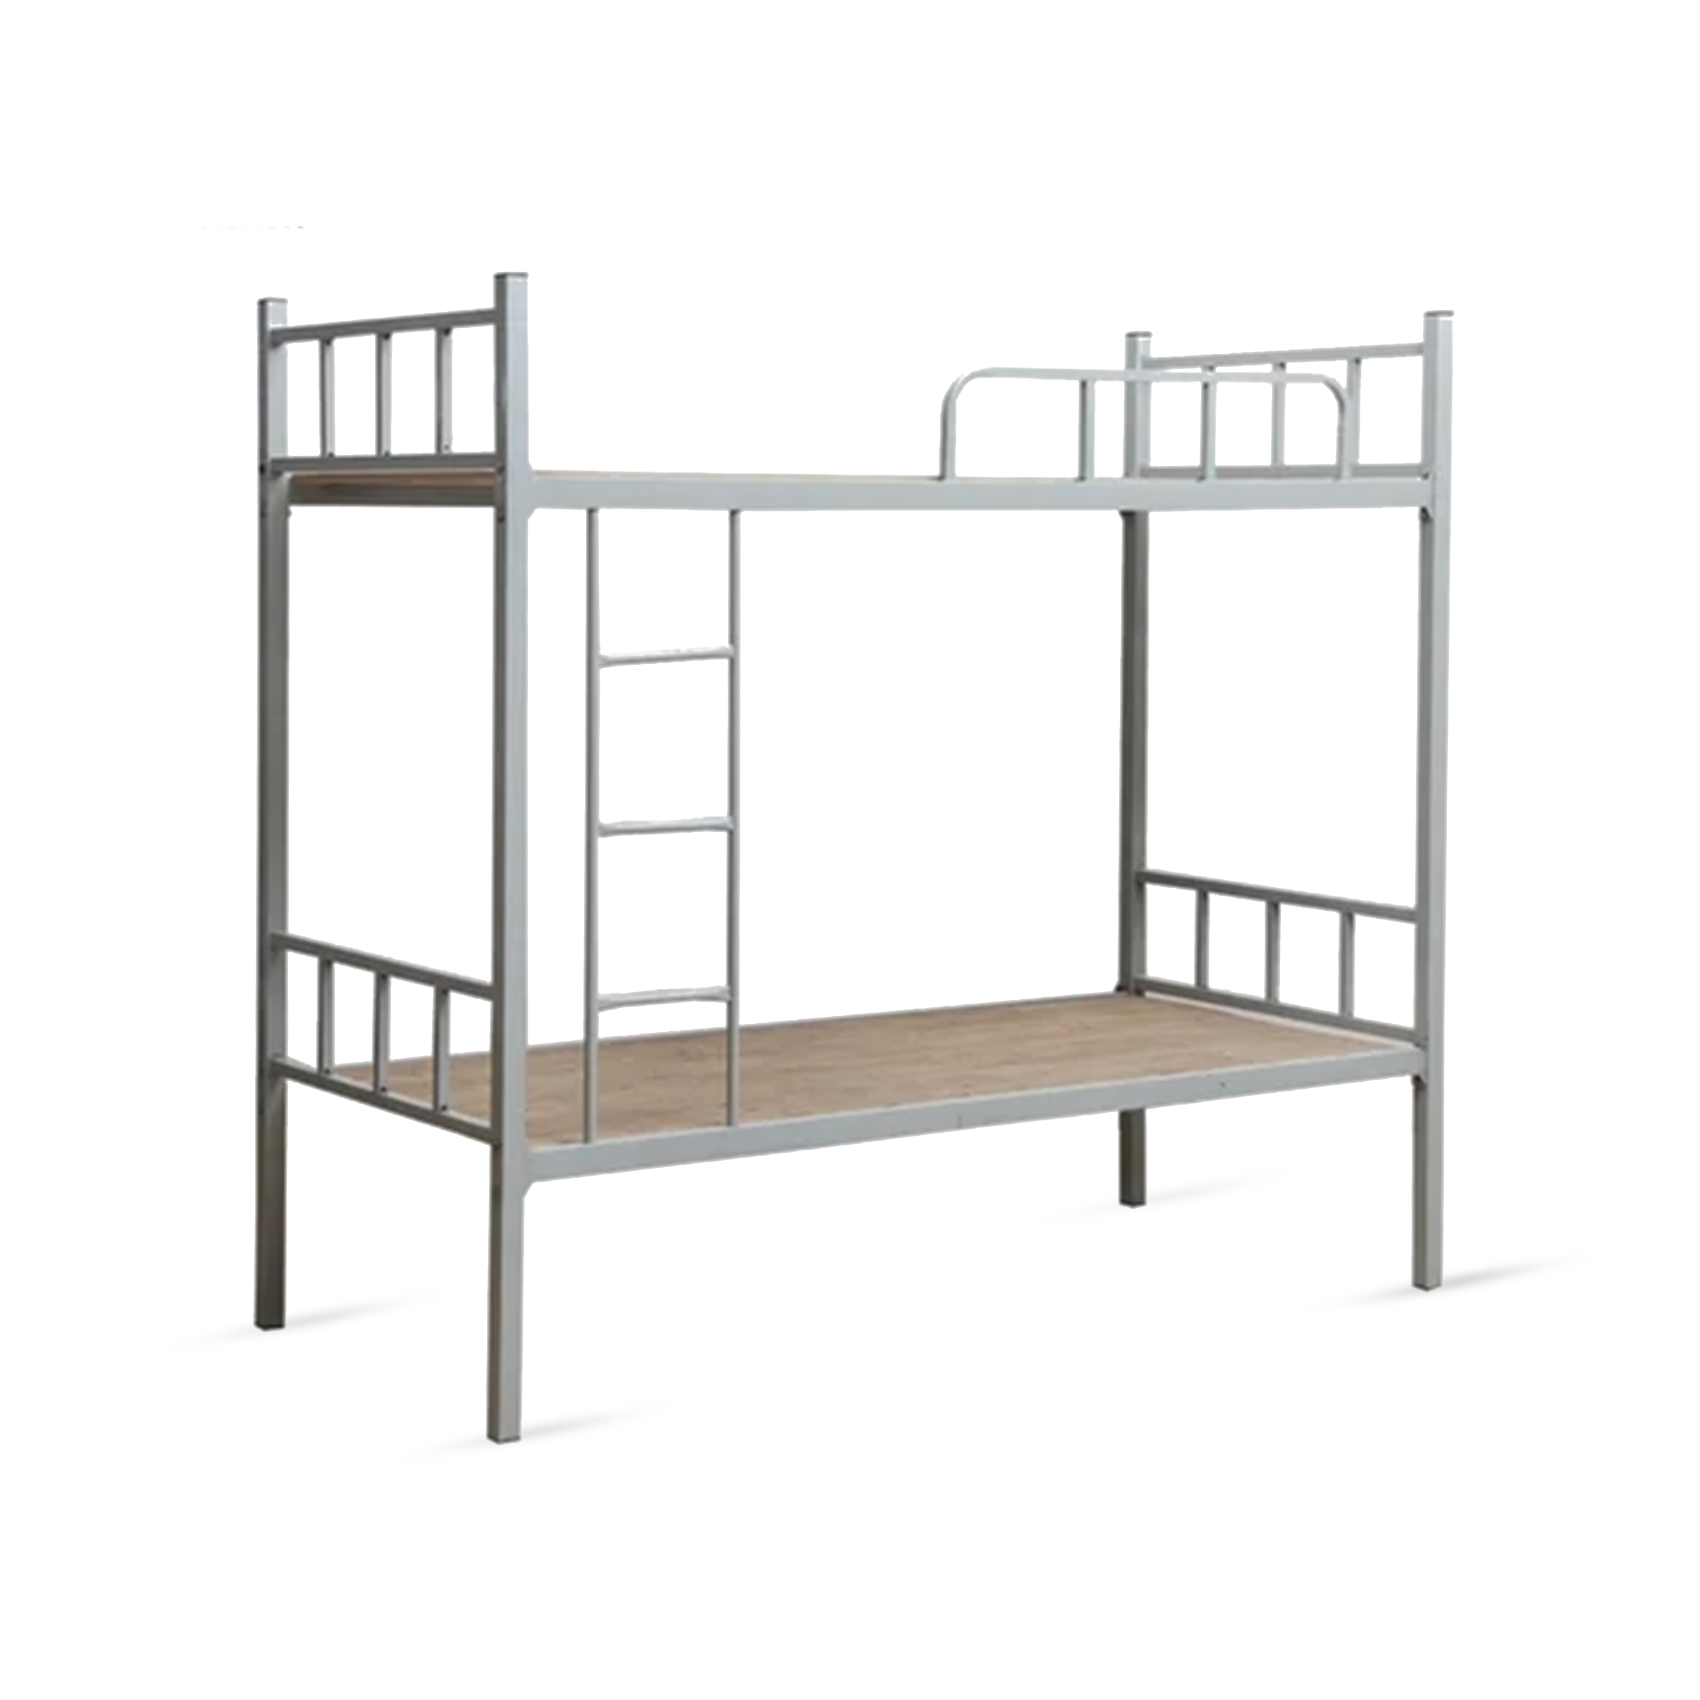 Shop Quality bunk beds in saudi arabia